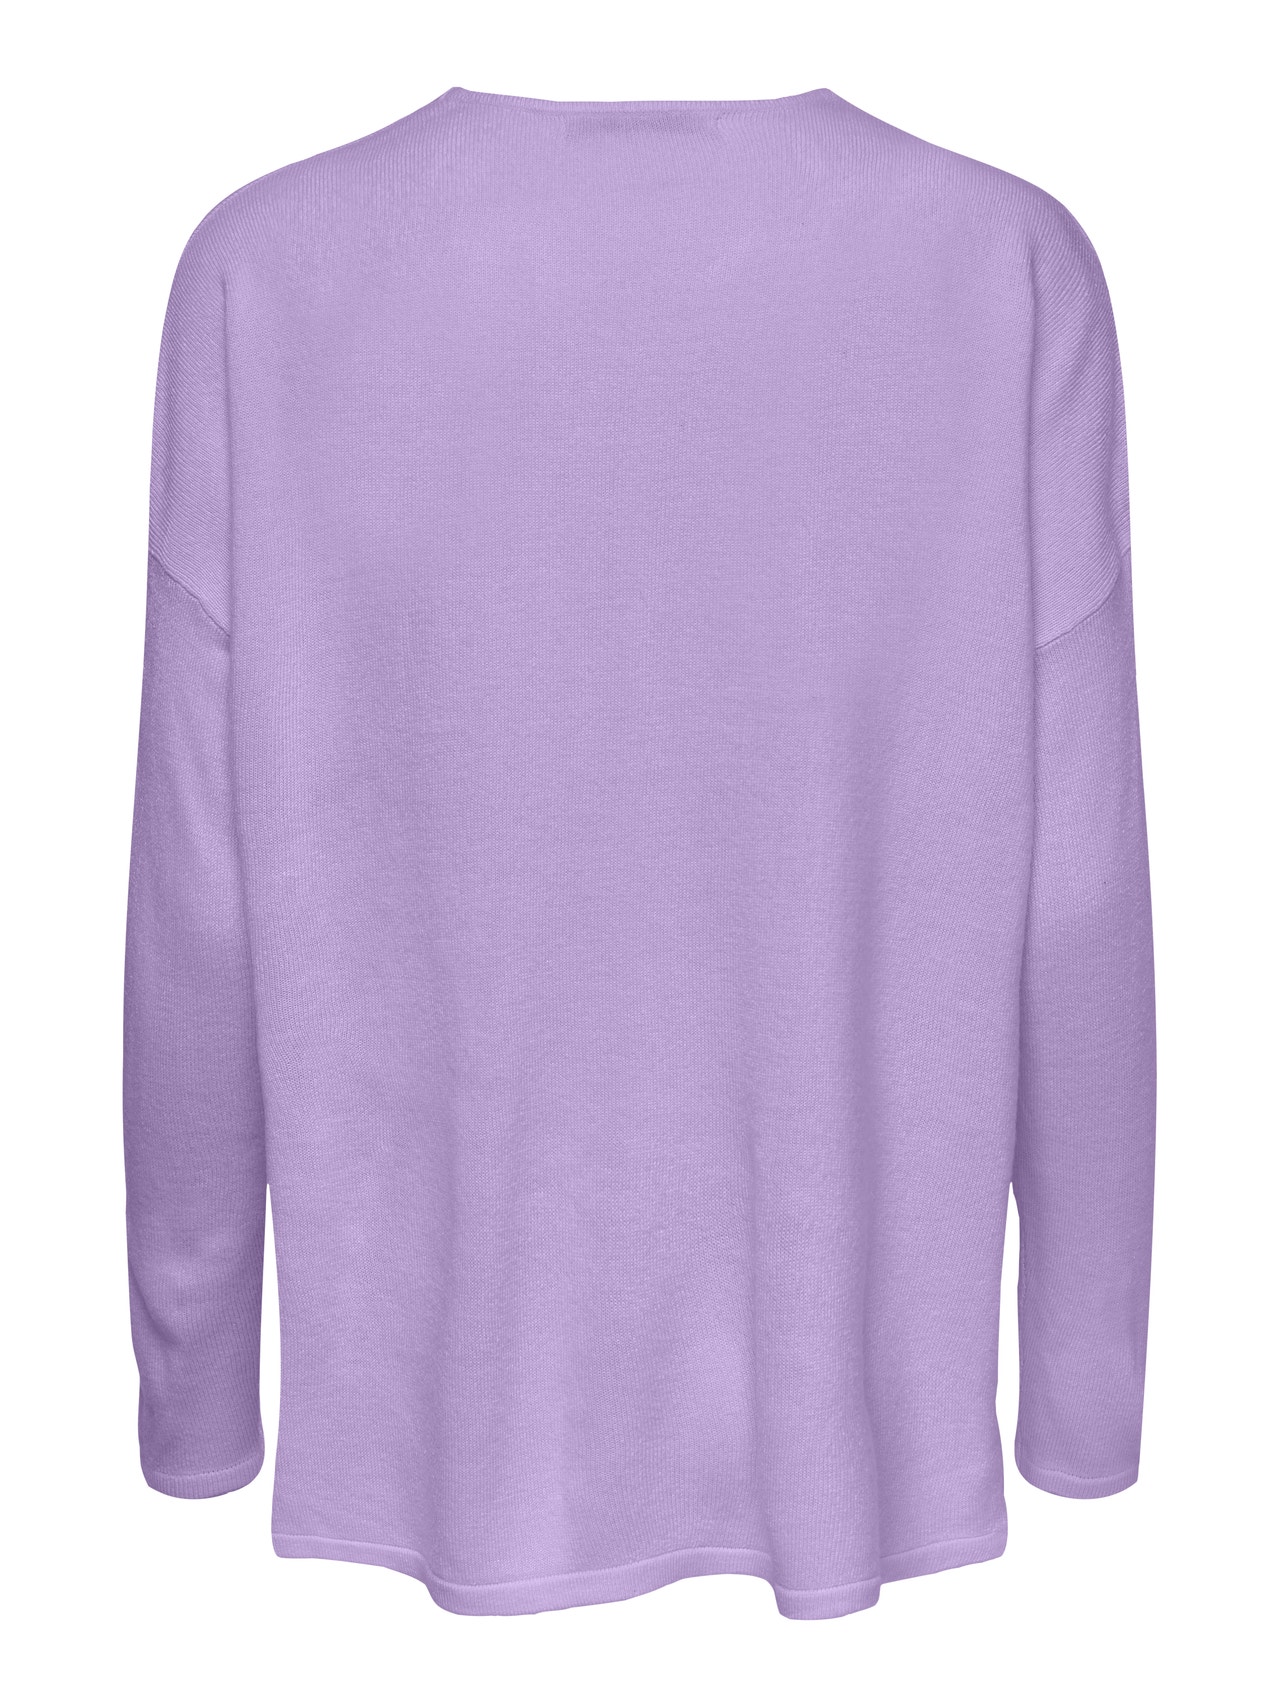 ONLY V-Neck Pullover -Purple Rose - 15219642